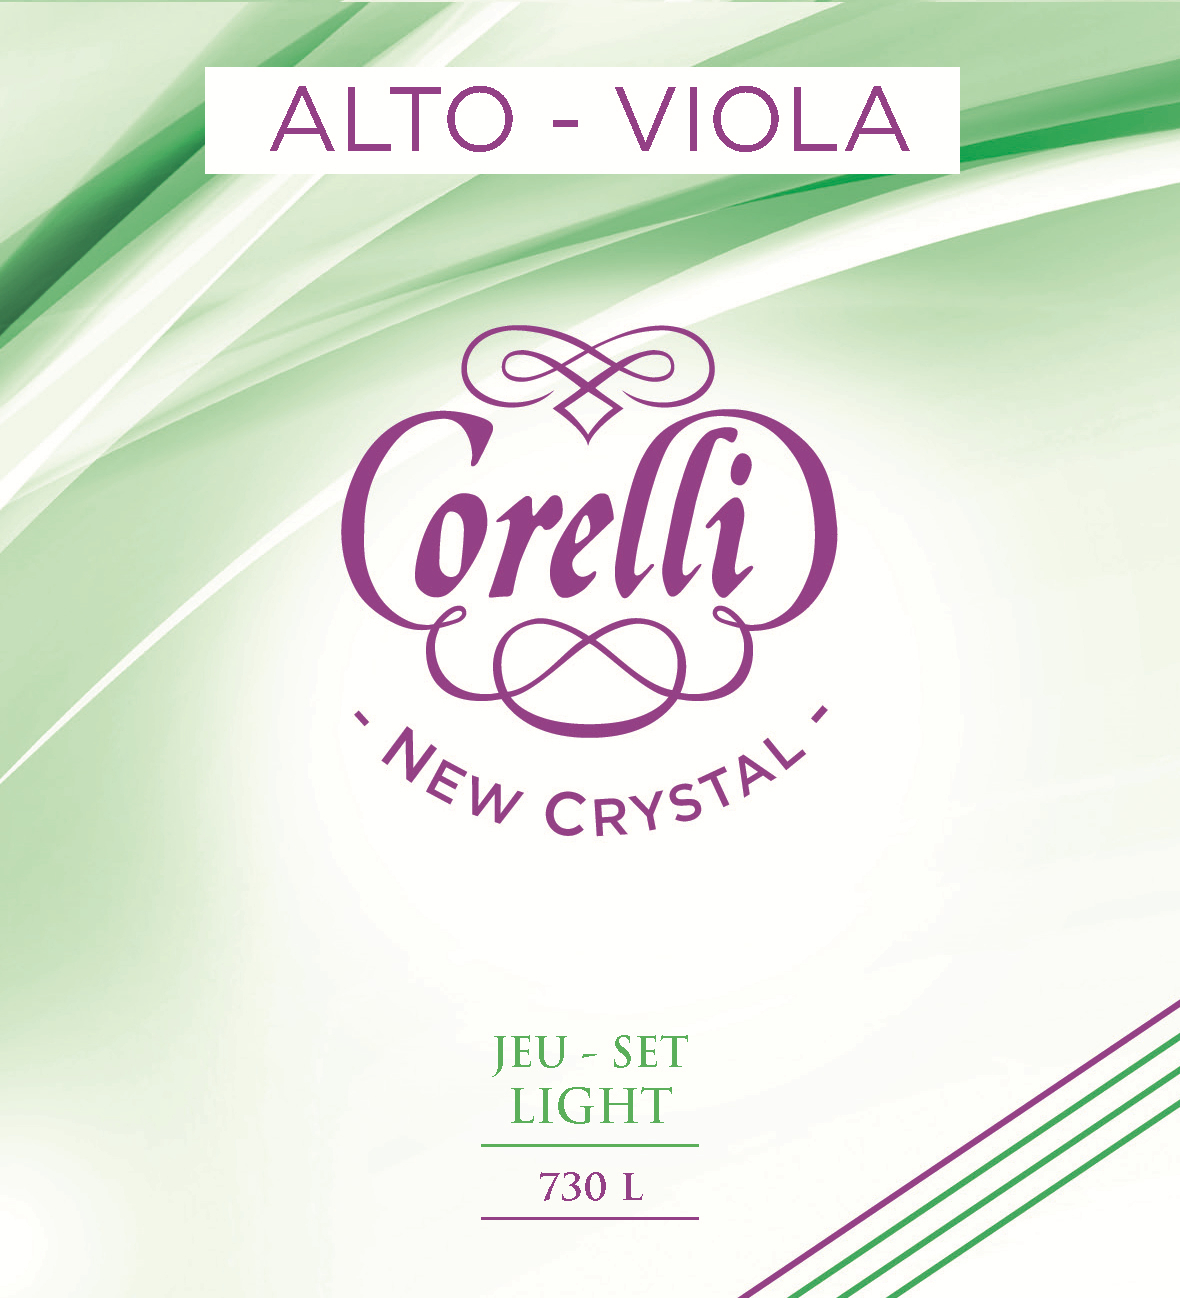 CORELLI NEW CRYSTAL LIGHT 730L ALTO